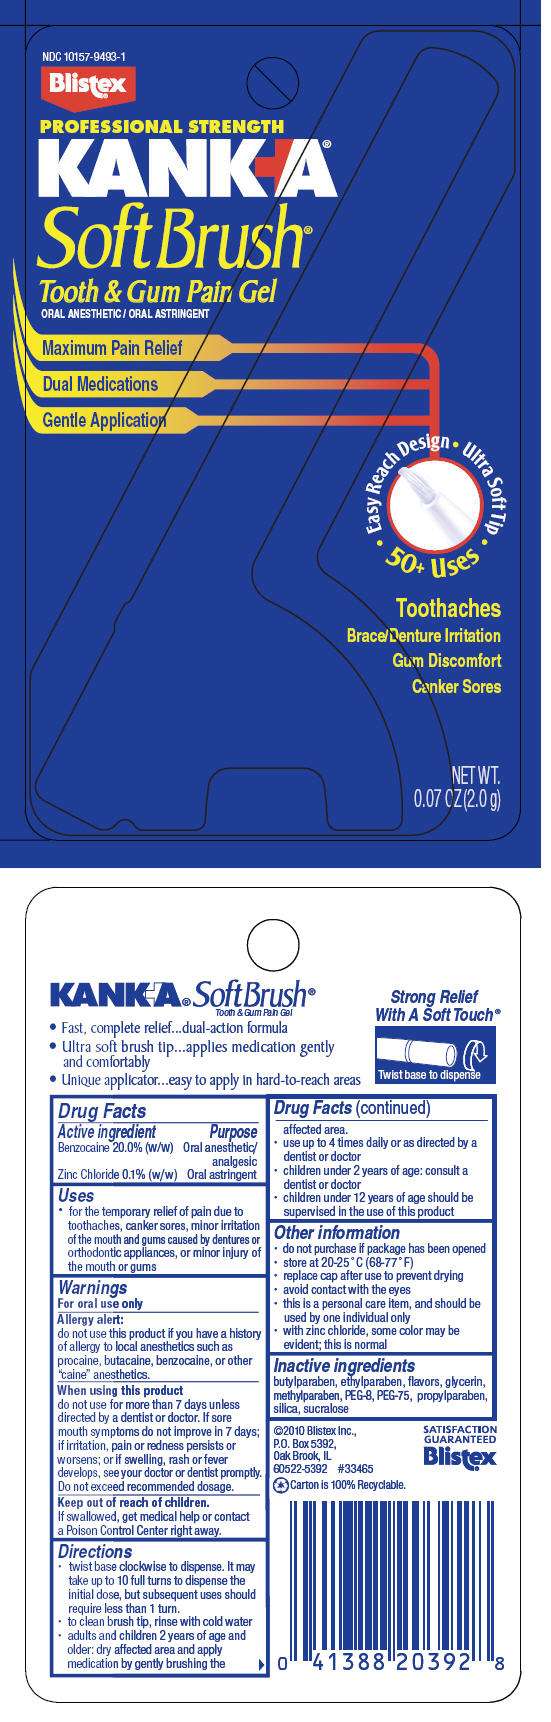 kanka soft brush gel side effects